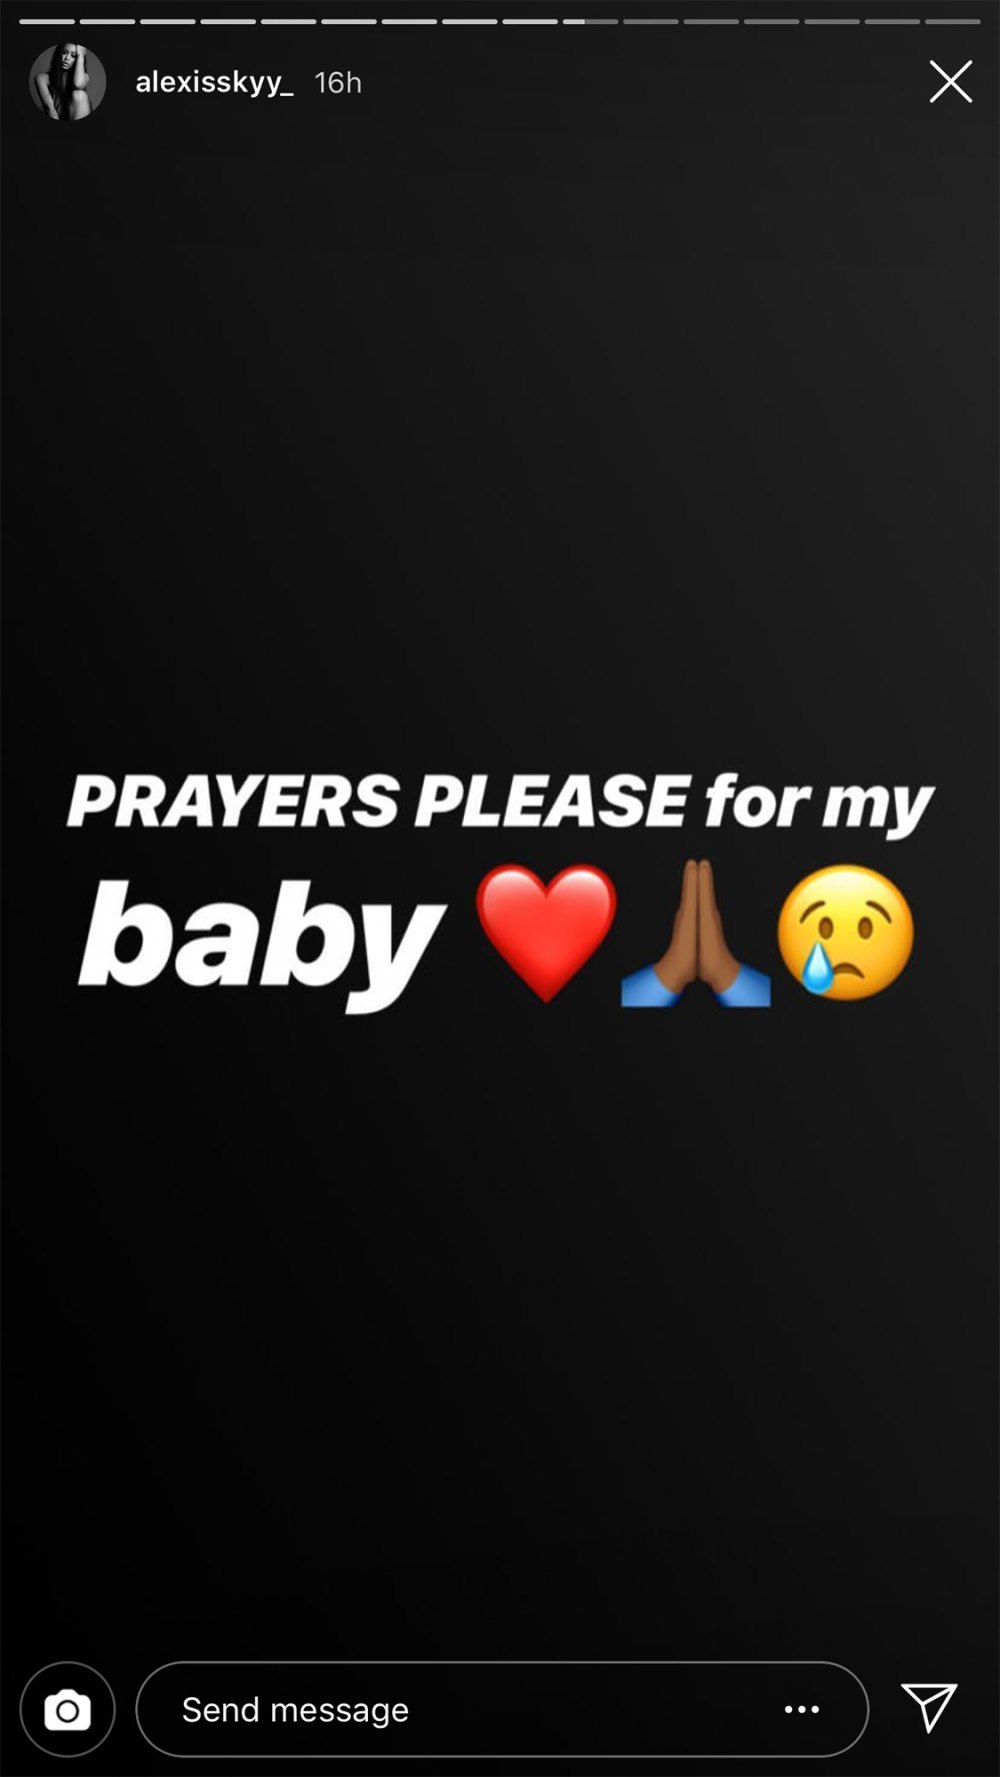 Alexis Skyy’s Baby Undergoes Surgery: ‘Prayers Please’